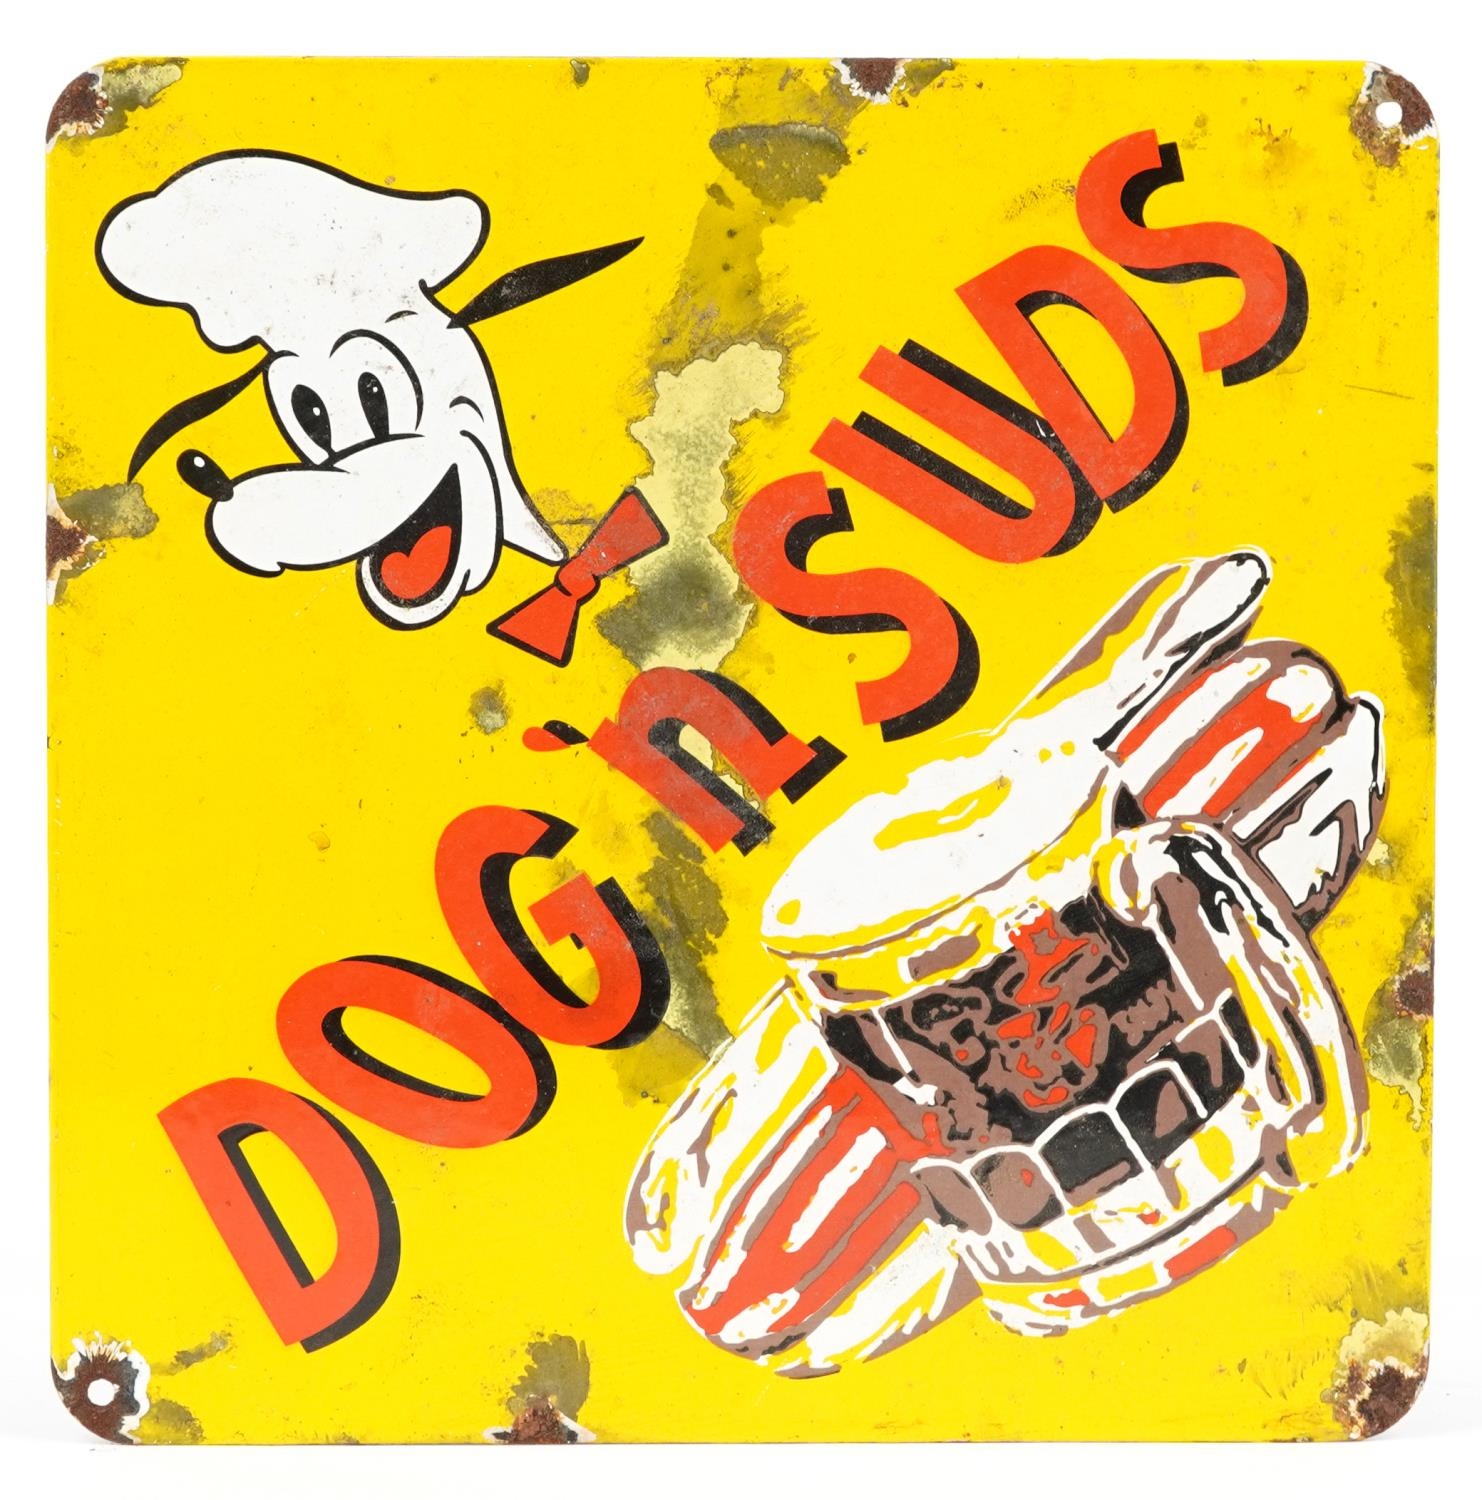 Dog'n Suds enamel advertising sign, 30cm x 30cm